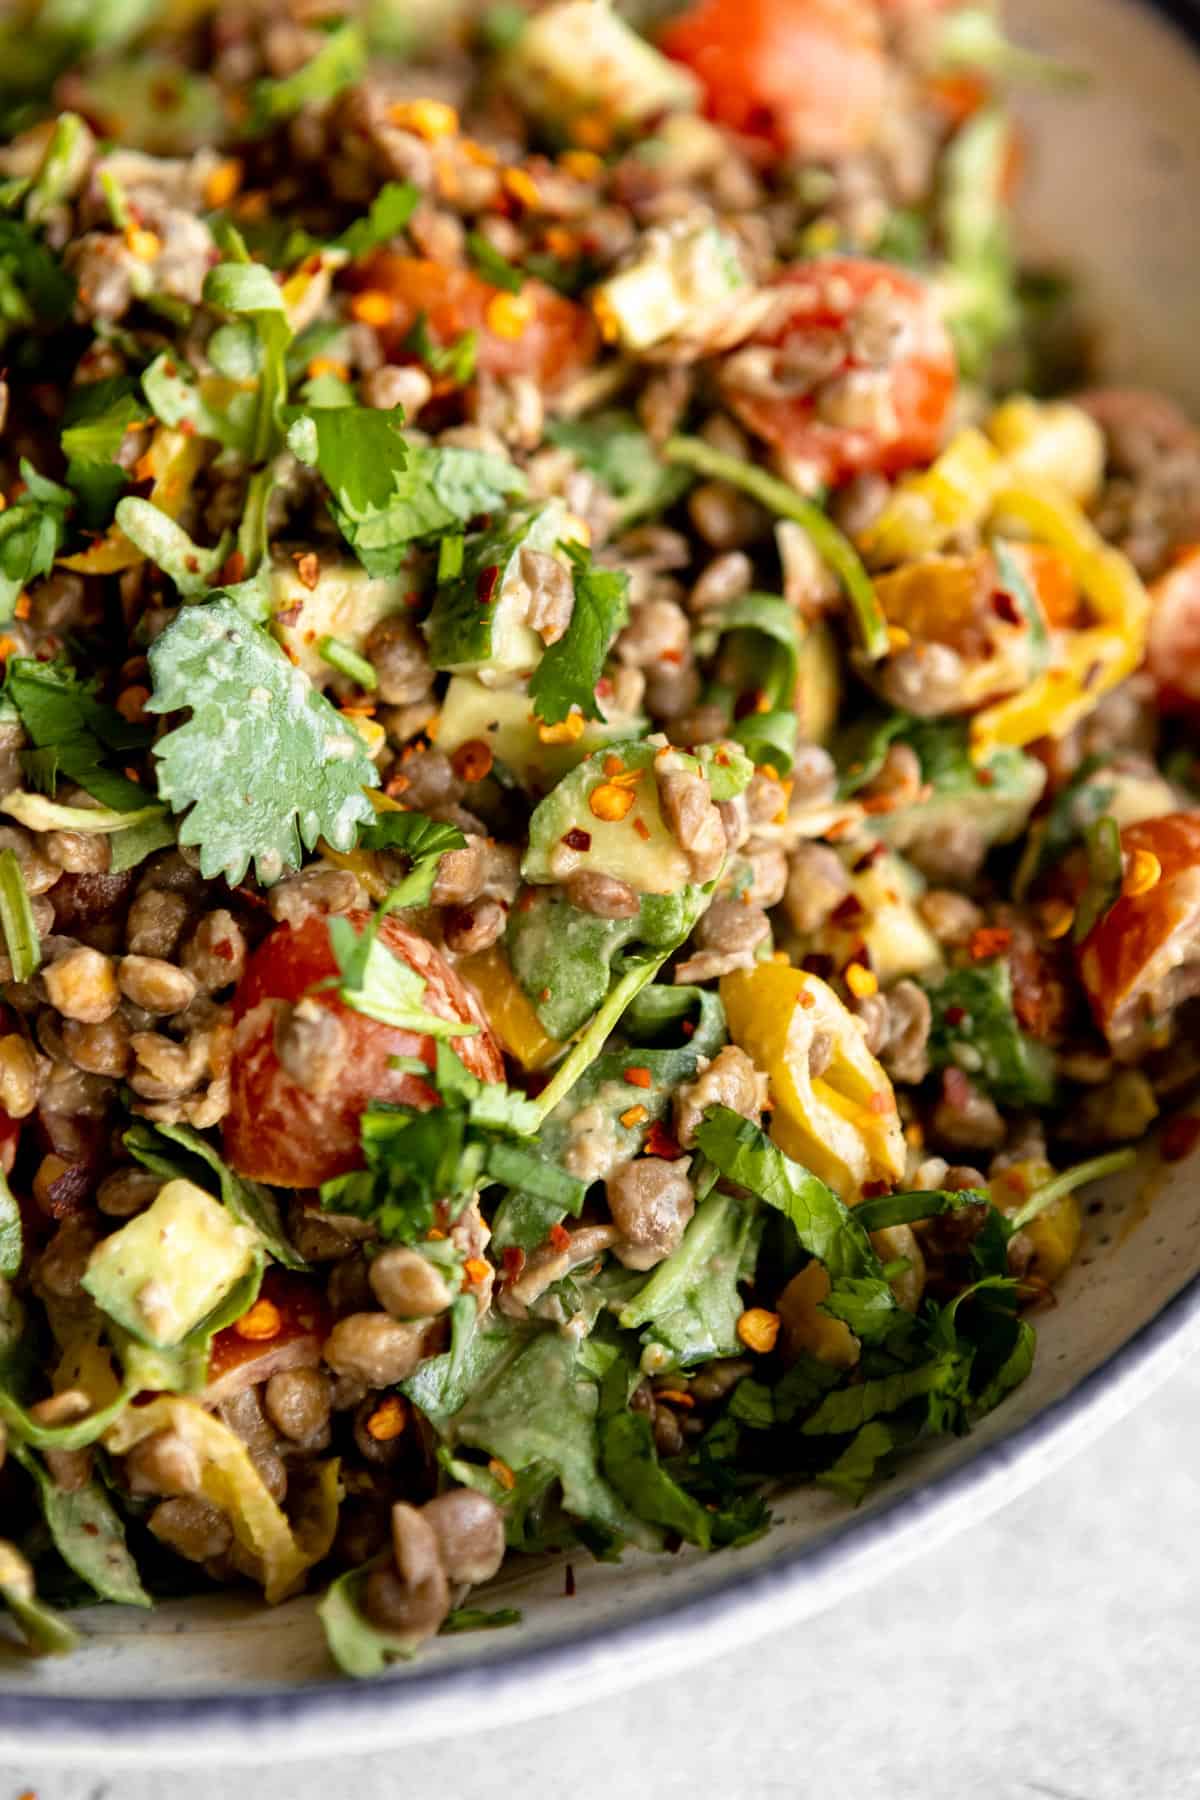 lentil salad with vegan tahini dressing tossed in a bowl